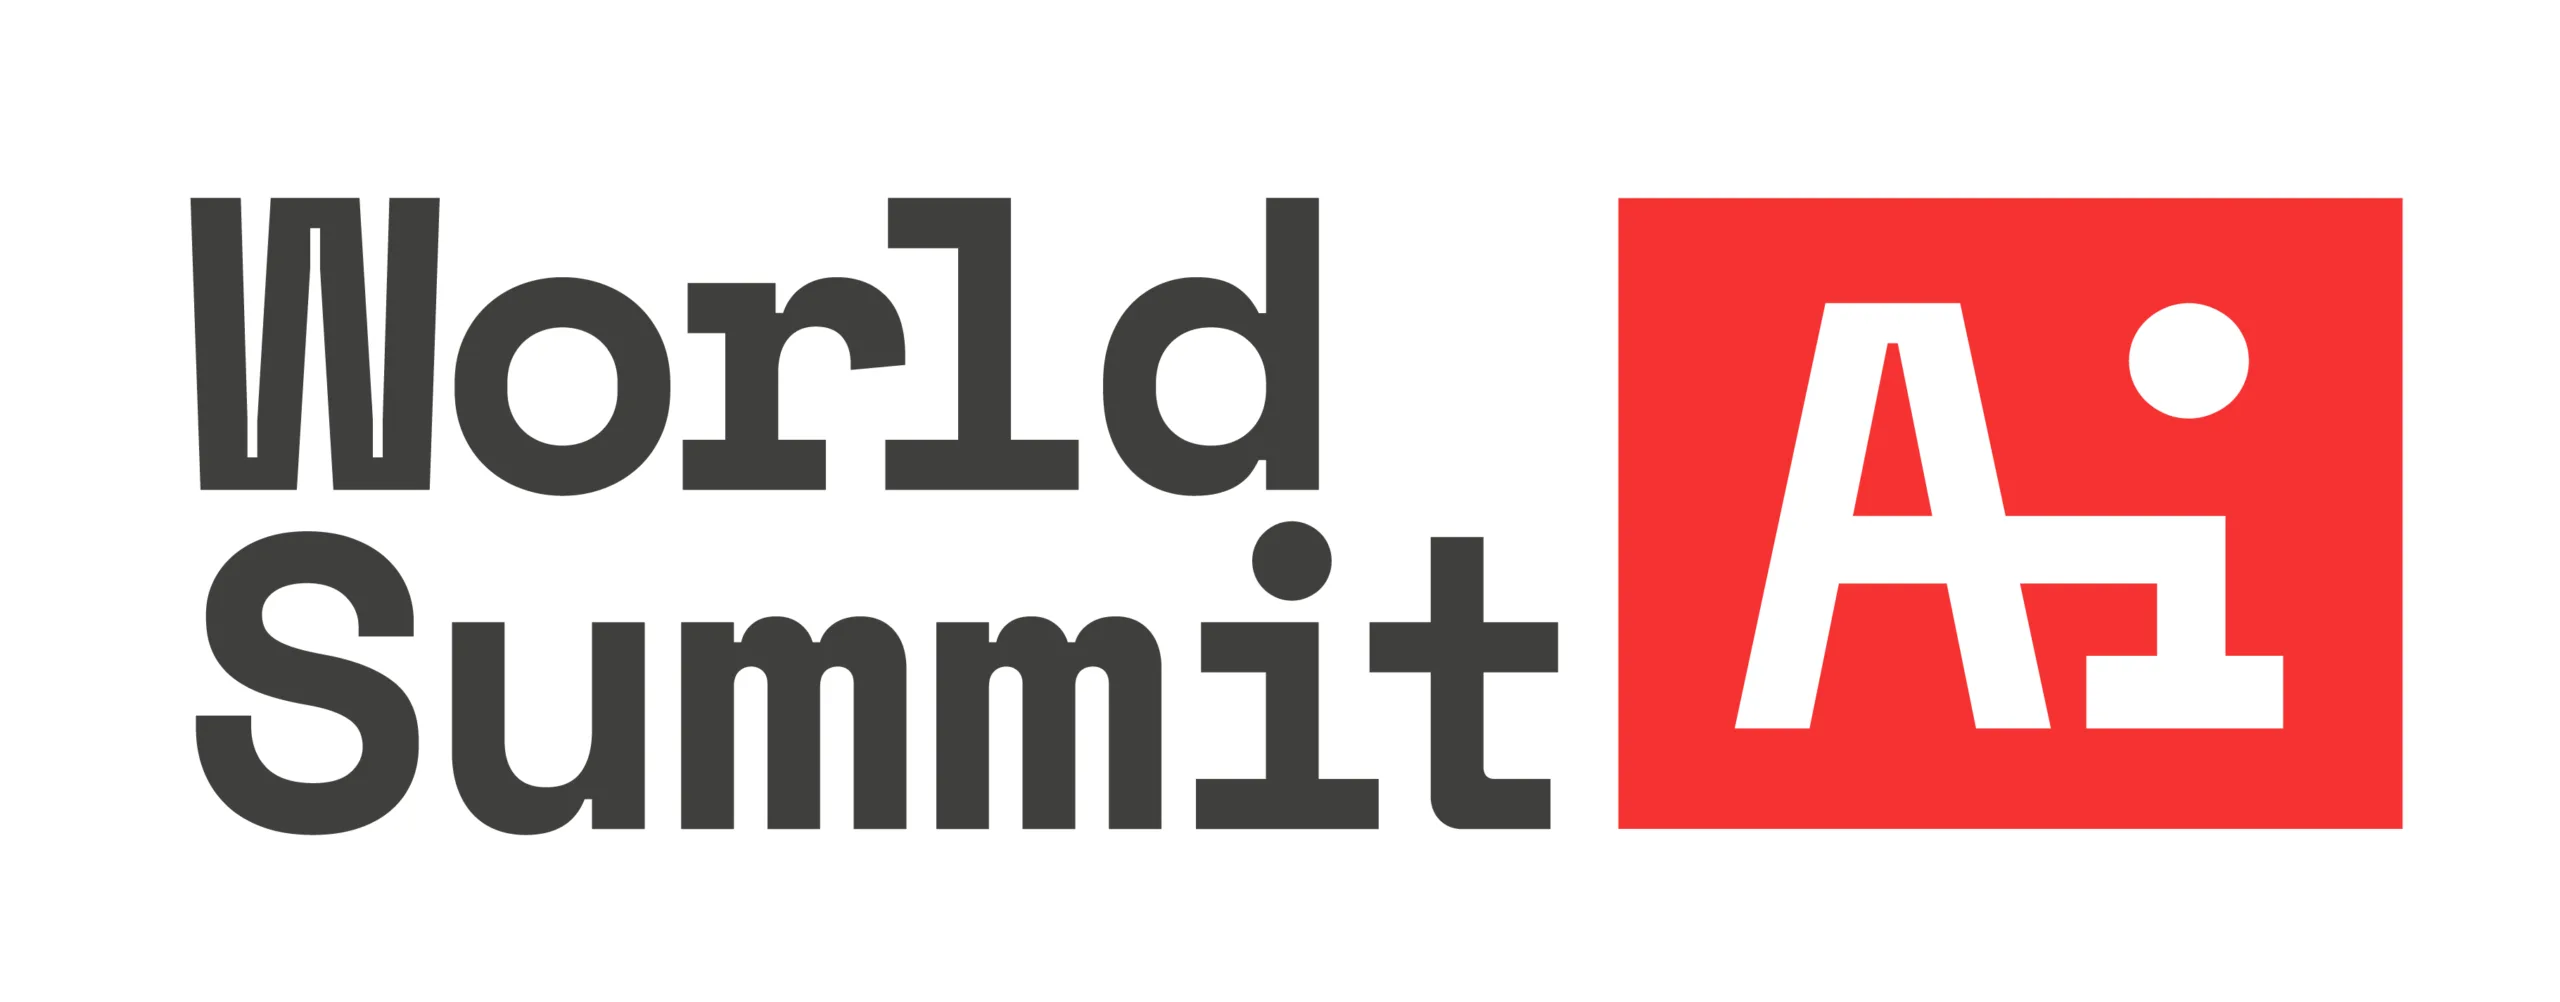 World Summit Ai